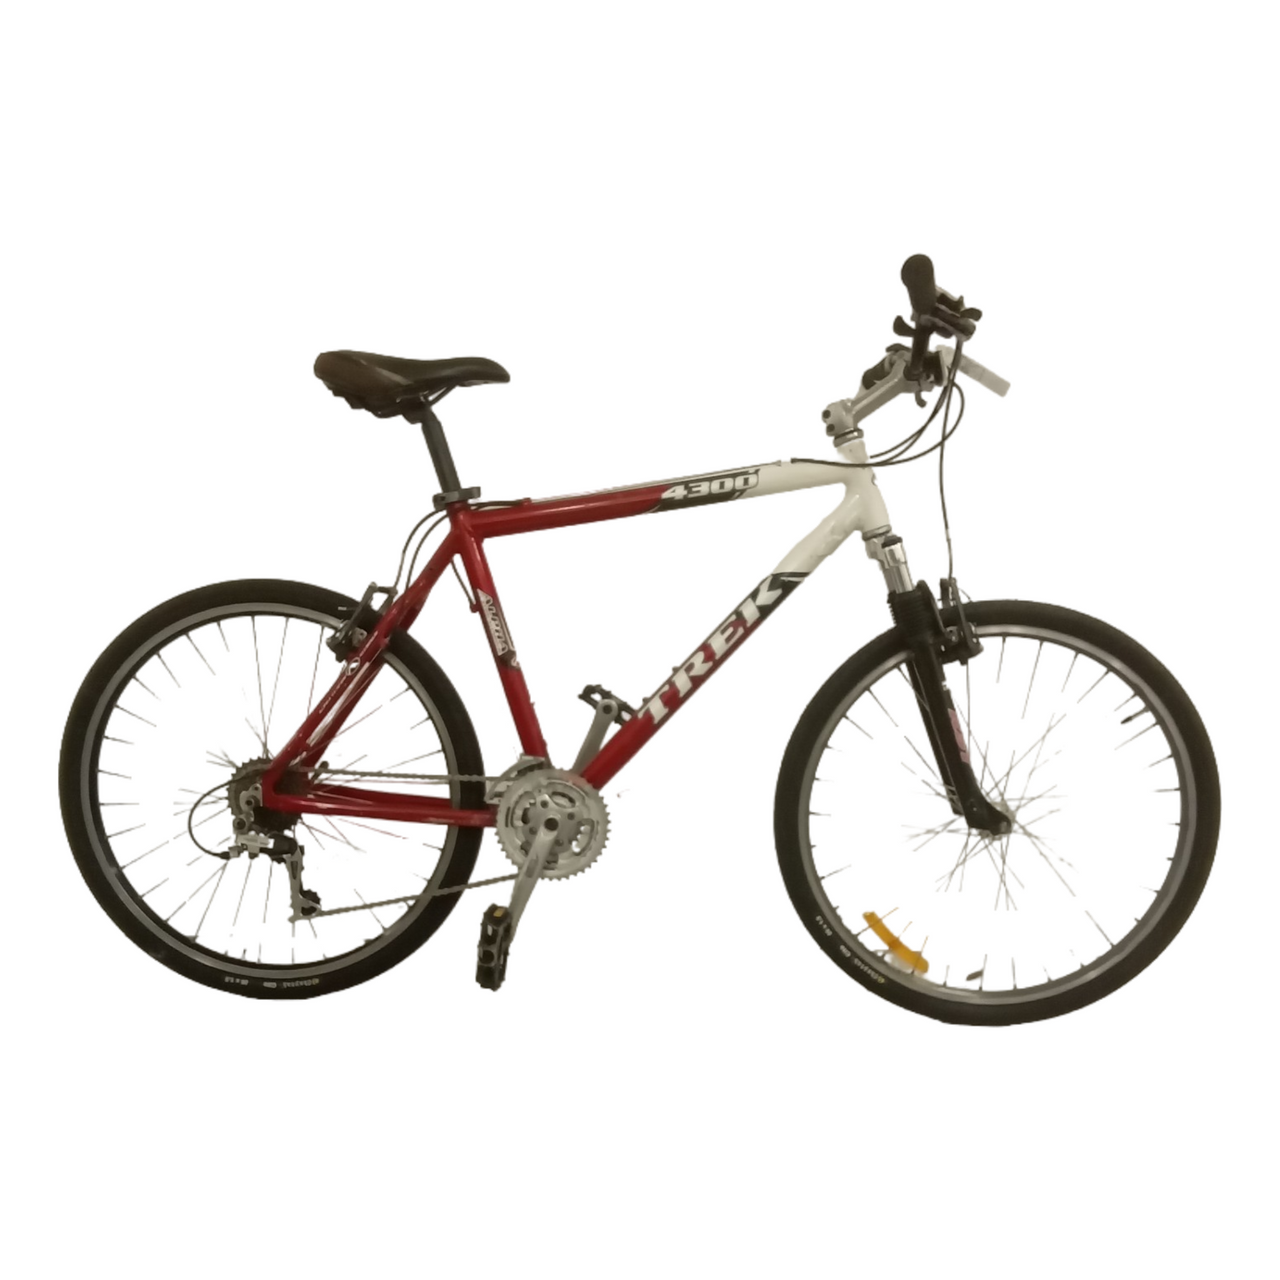 1460 - 50cm White,
Red, Mountain Bike, Bike